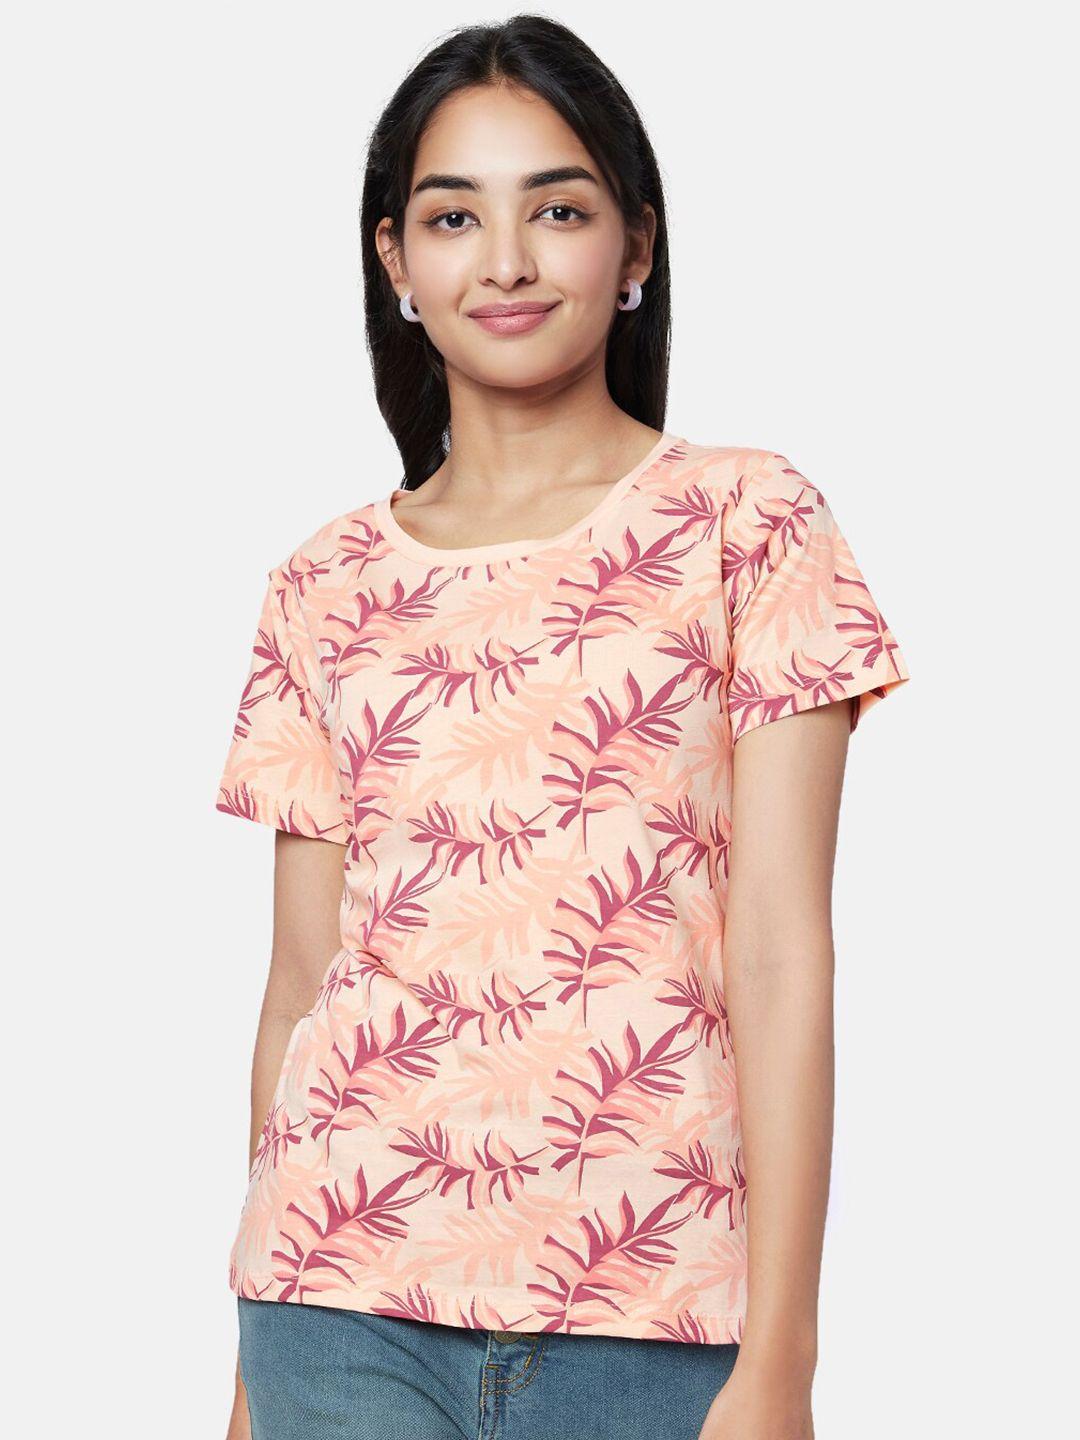 yu-by-pantaloons-women-tropical-printed-cotton-t-shirt